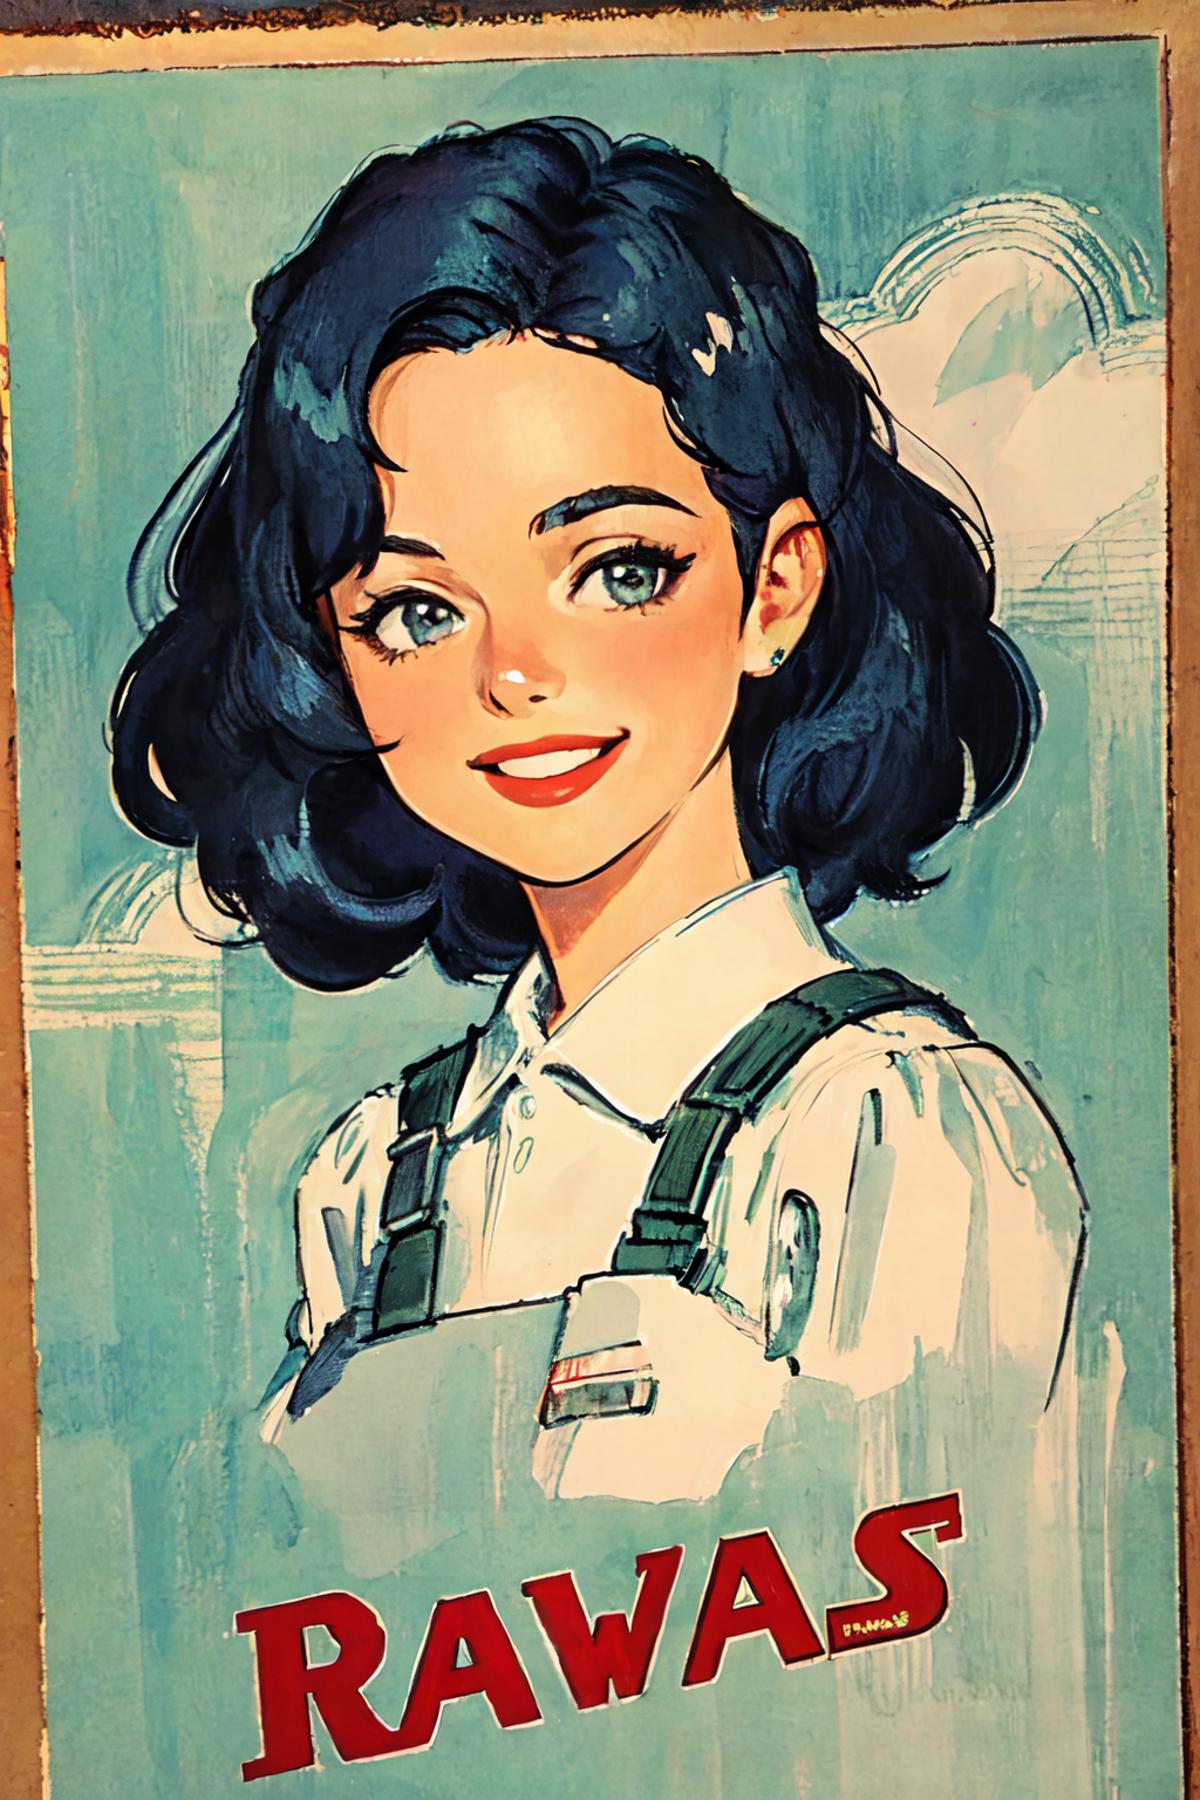 [Y5]vintage ad style 复古广告风格 ヴィンテージ広告スタイル image by kokurine